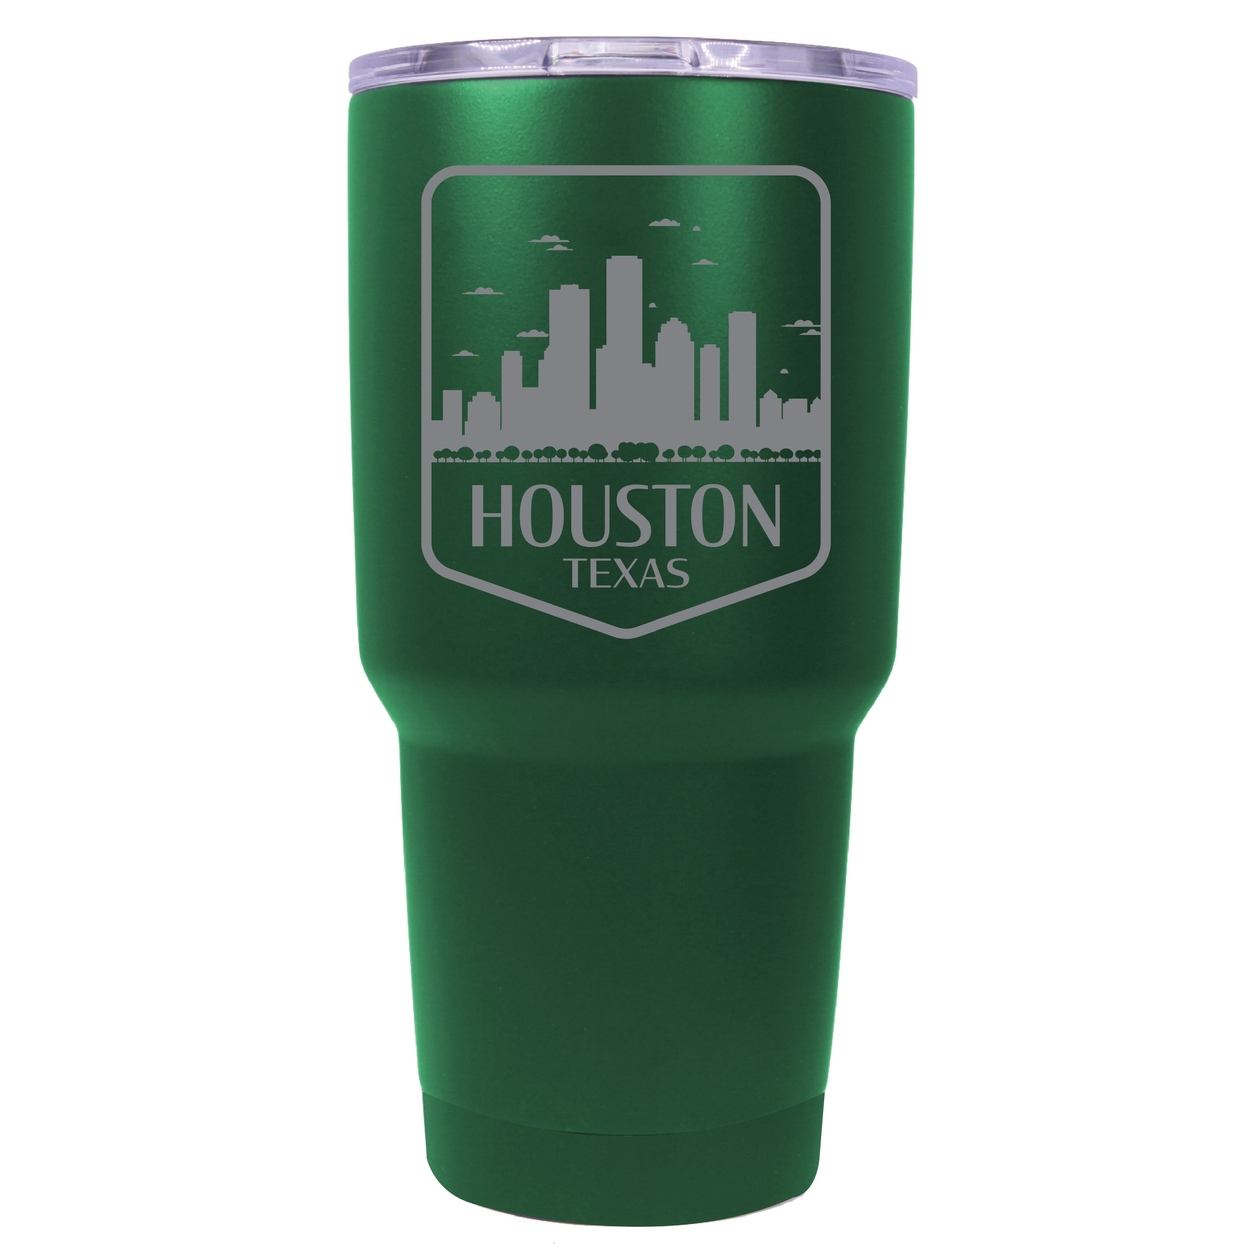 Houston Texas Souvenir 24 Oz Engraved Insulated Stainless Steel Tumbler - Green,,4-Pack